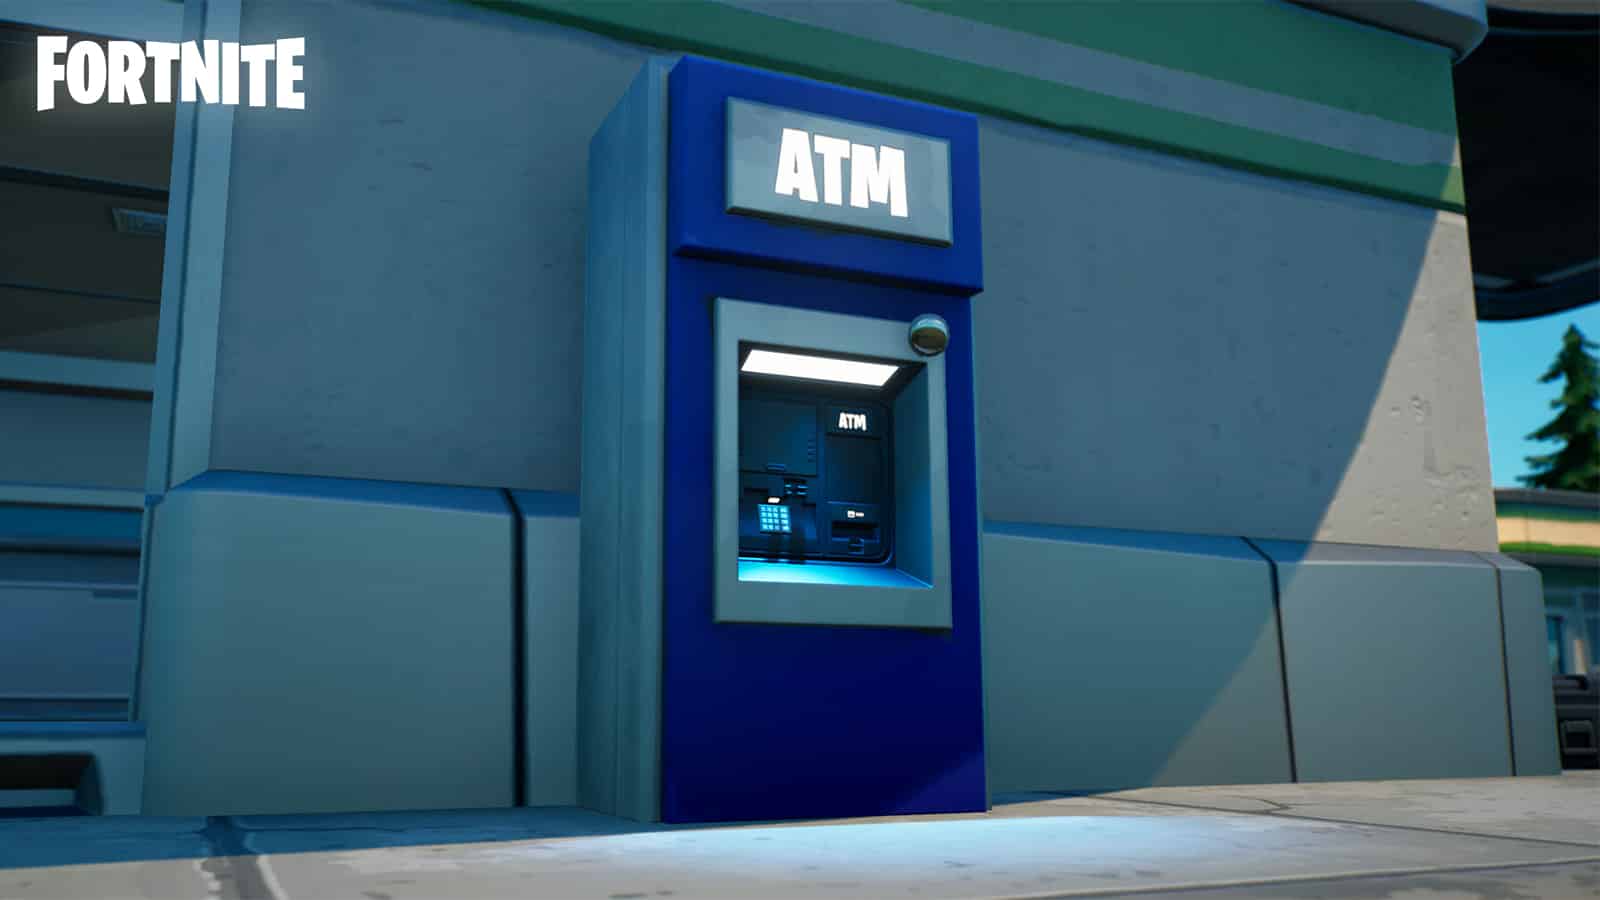 Fortnite ATM locations